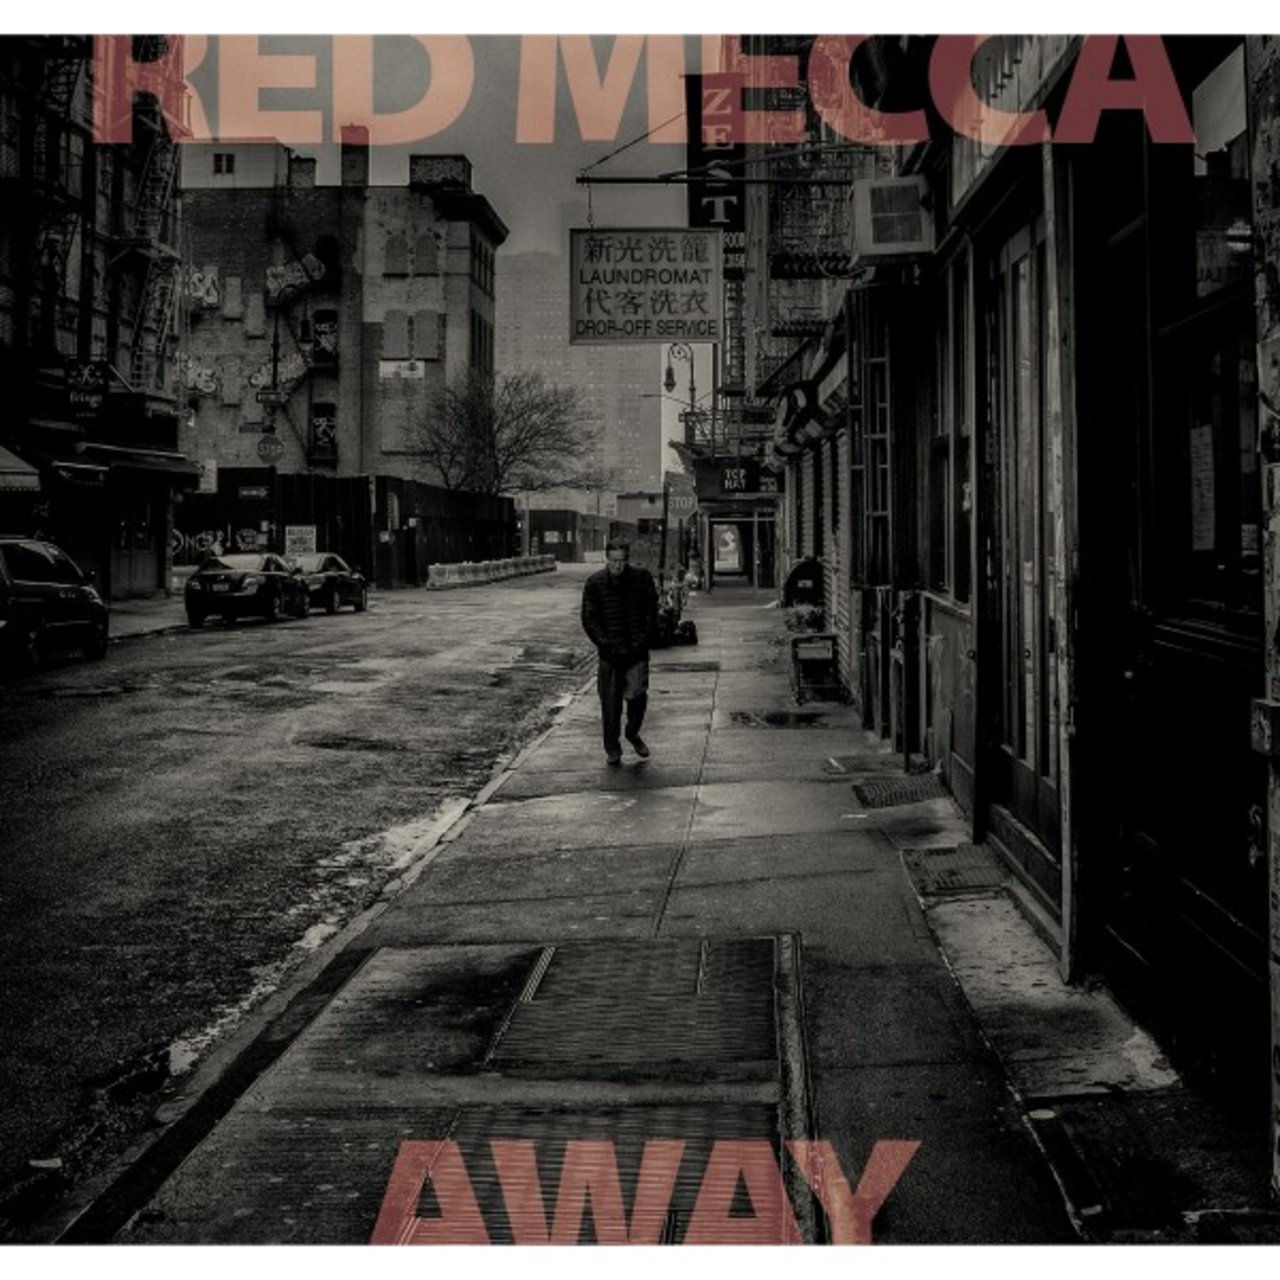 Away - Red Mecca